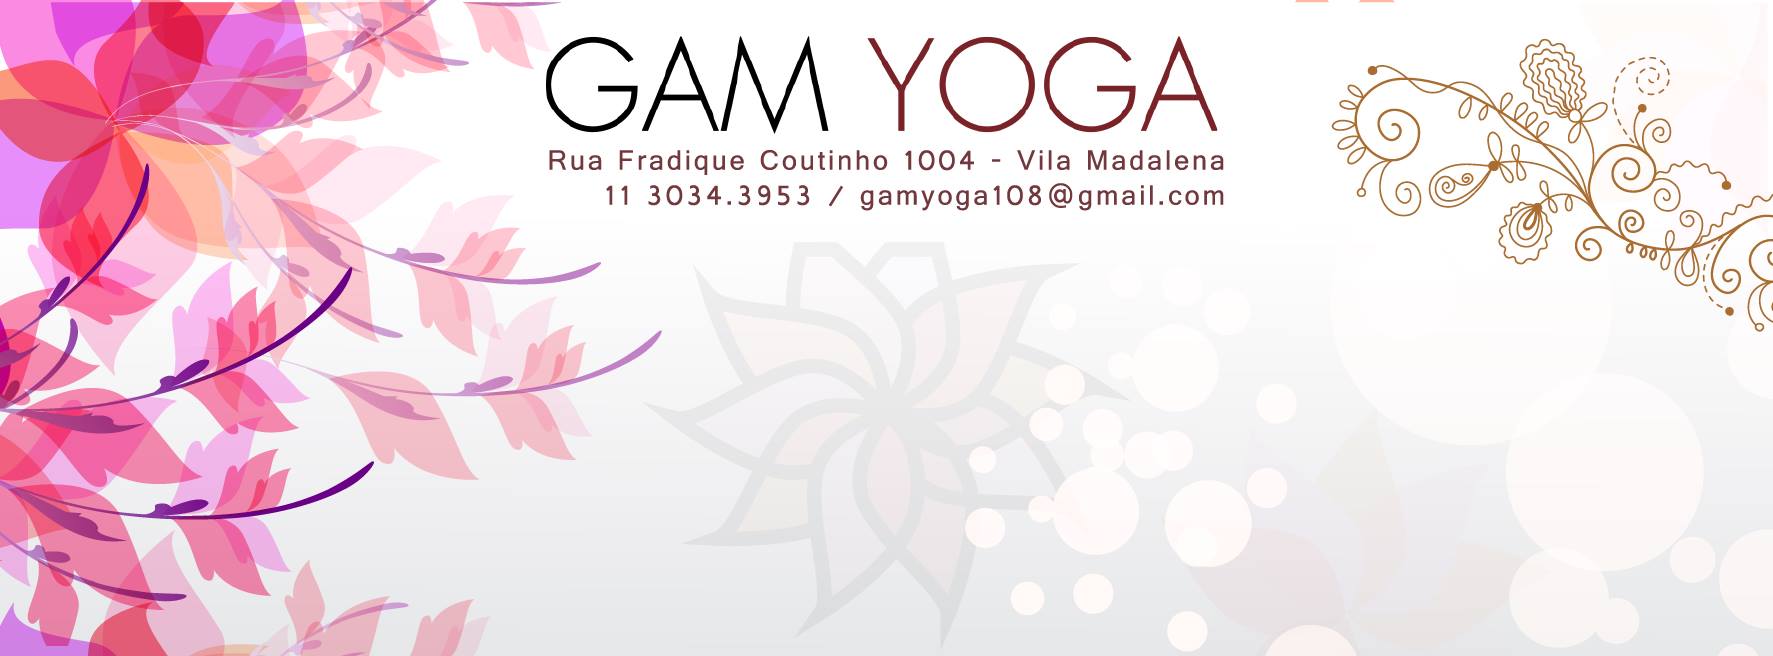 Gam Yoga Center